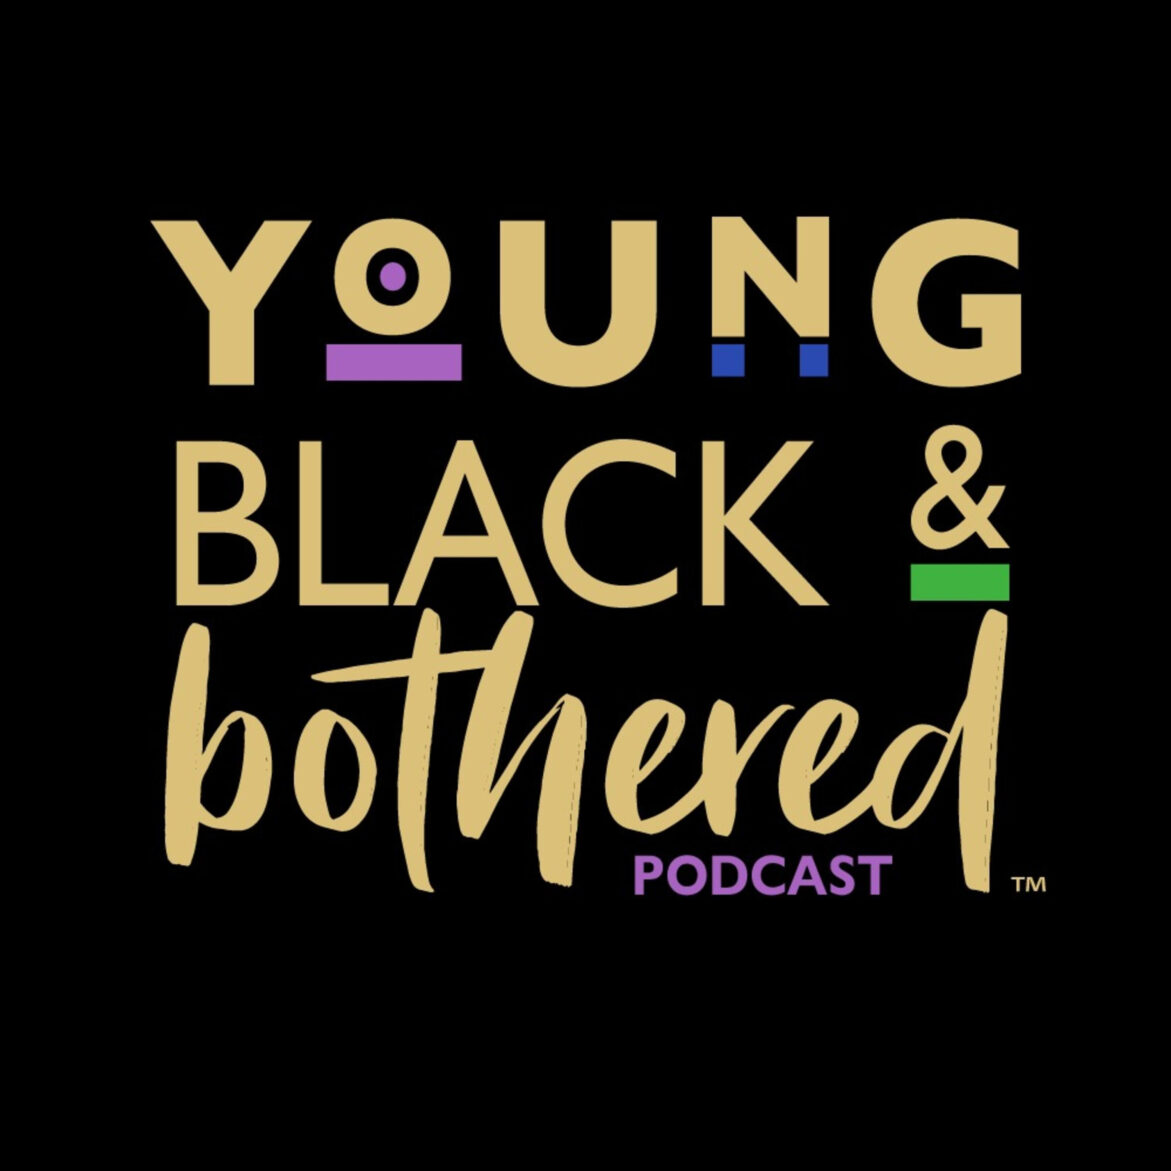 Black Podcasting - 90: Here N*gga Damn DIck